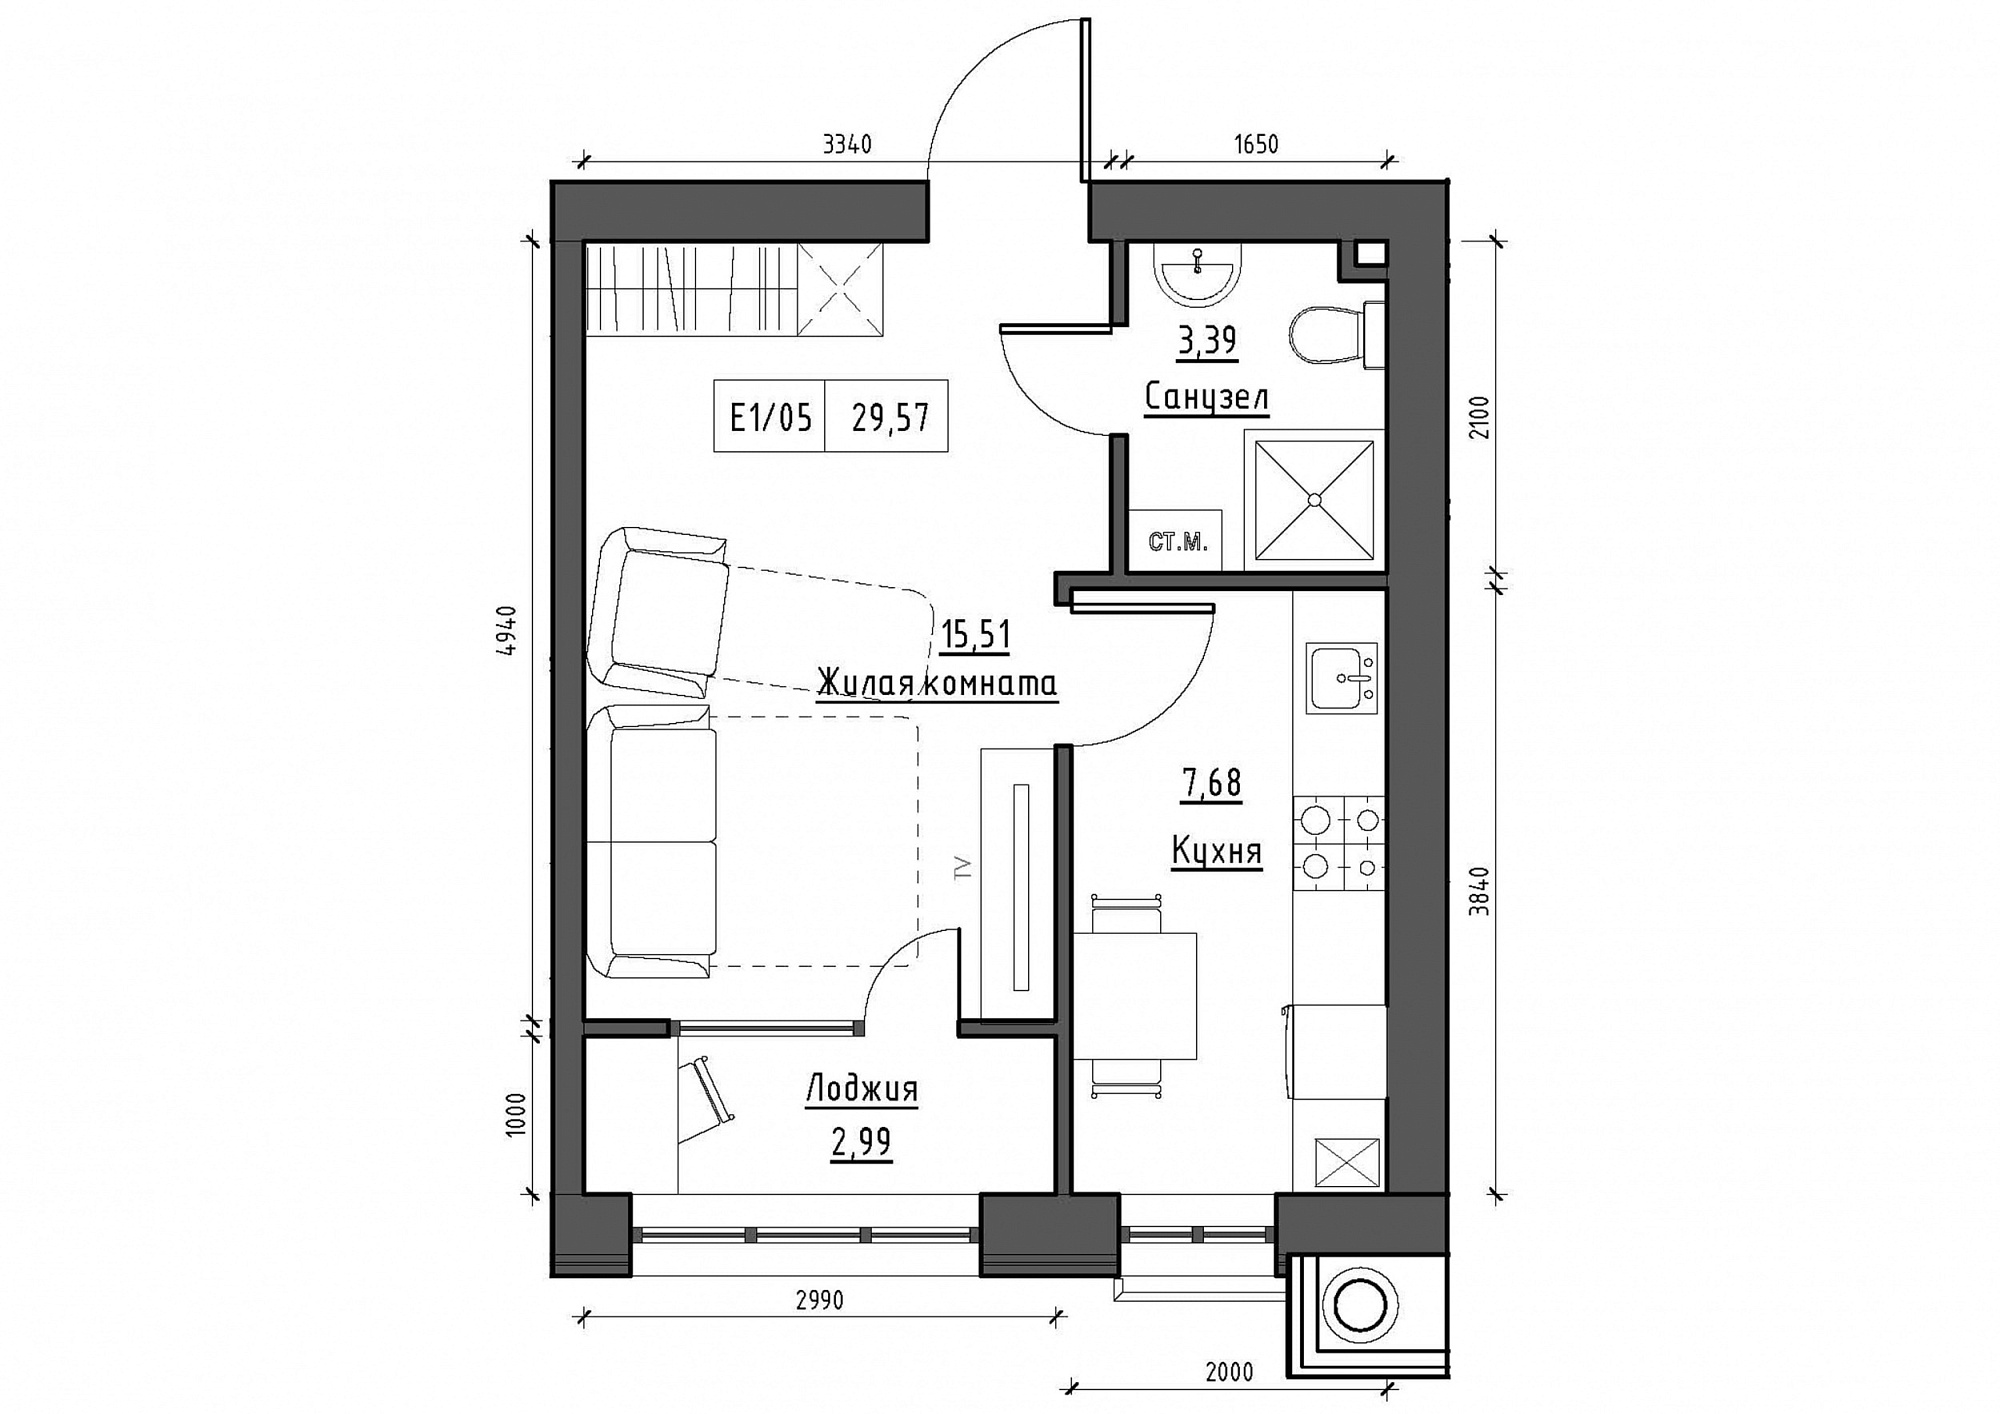 Planning 1-rm flats area 29.57m2, KS-012-04/0006.